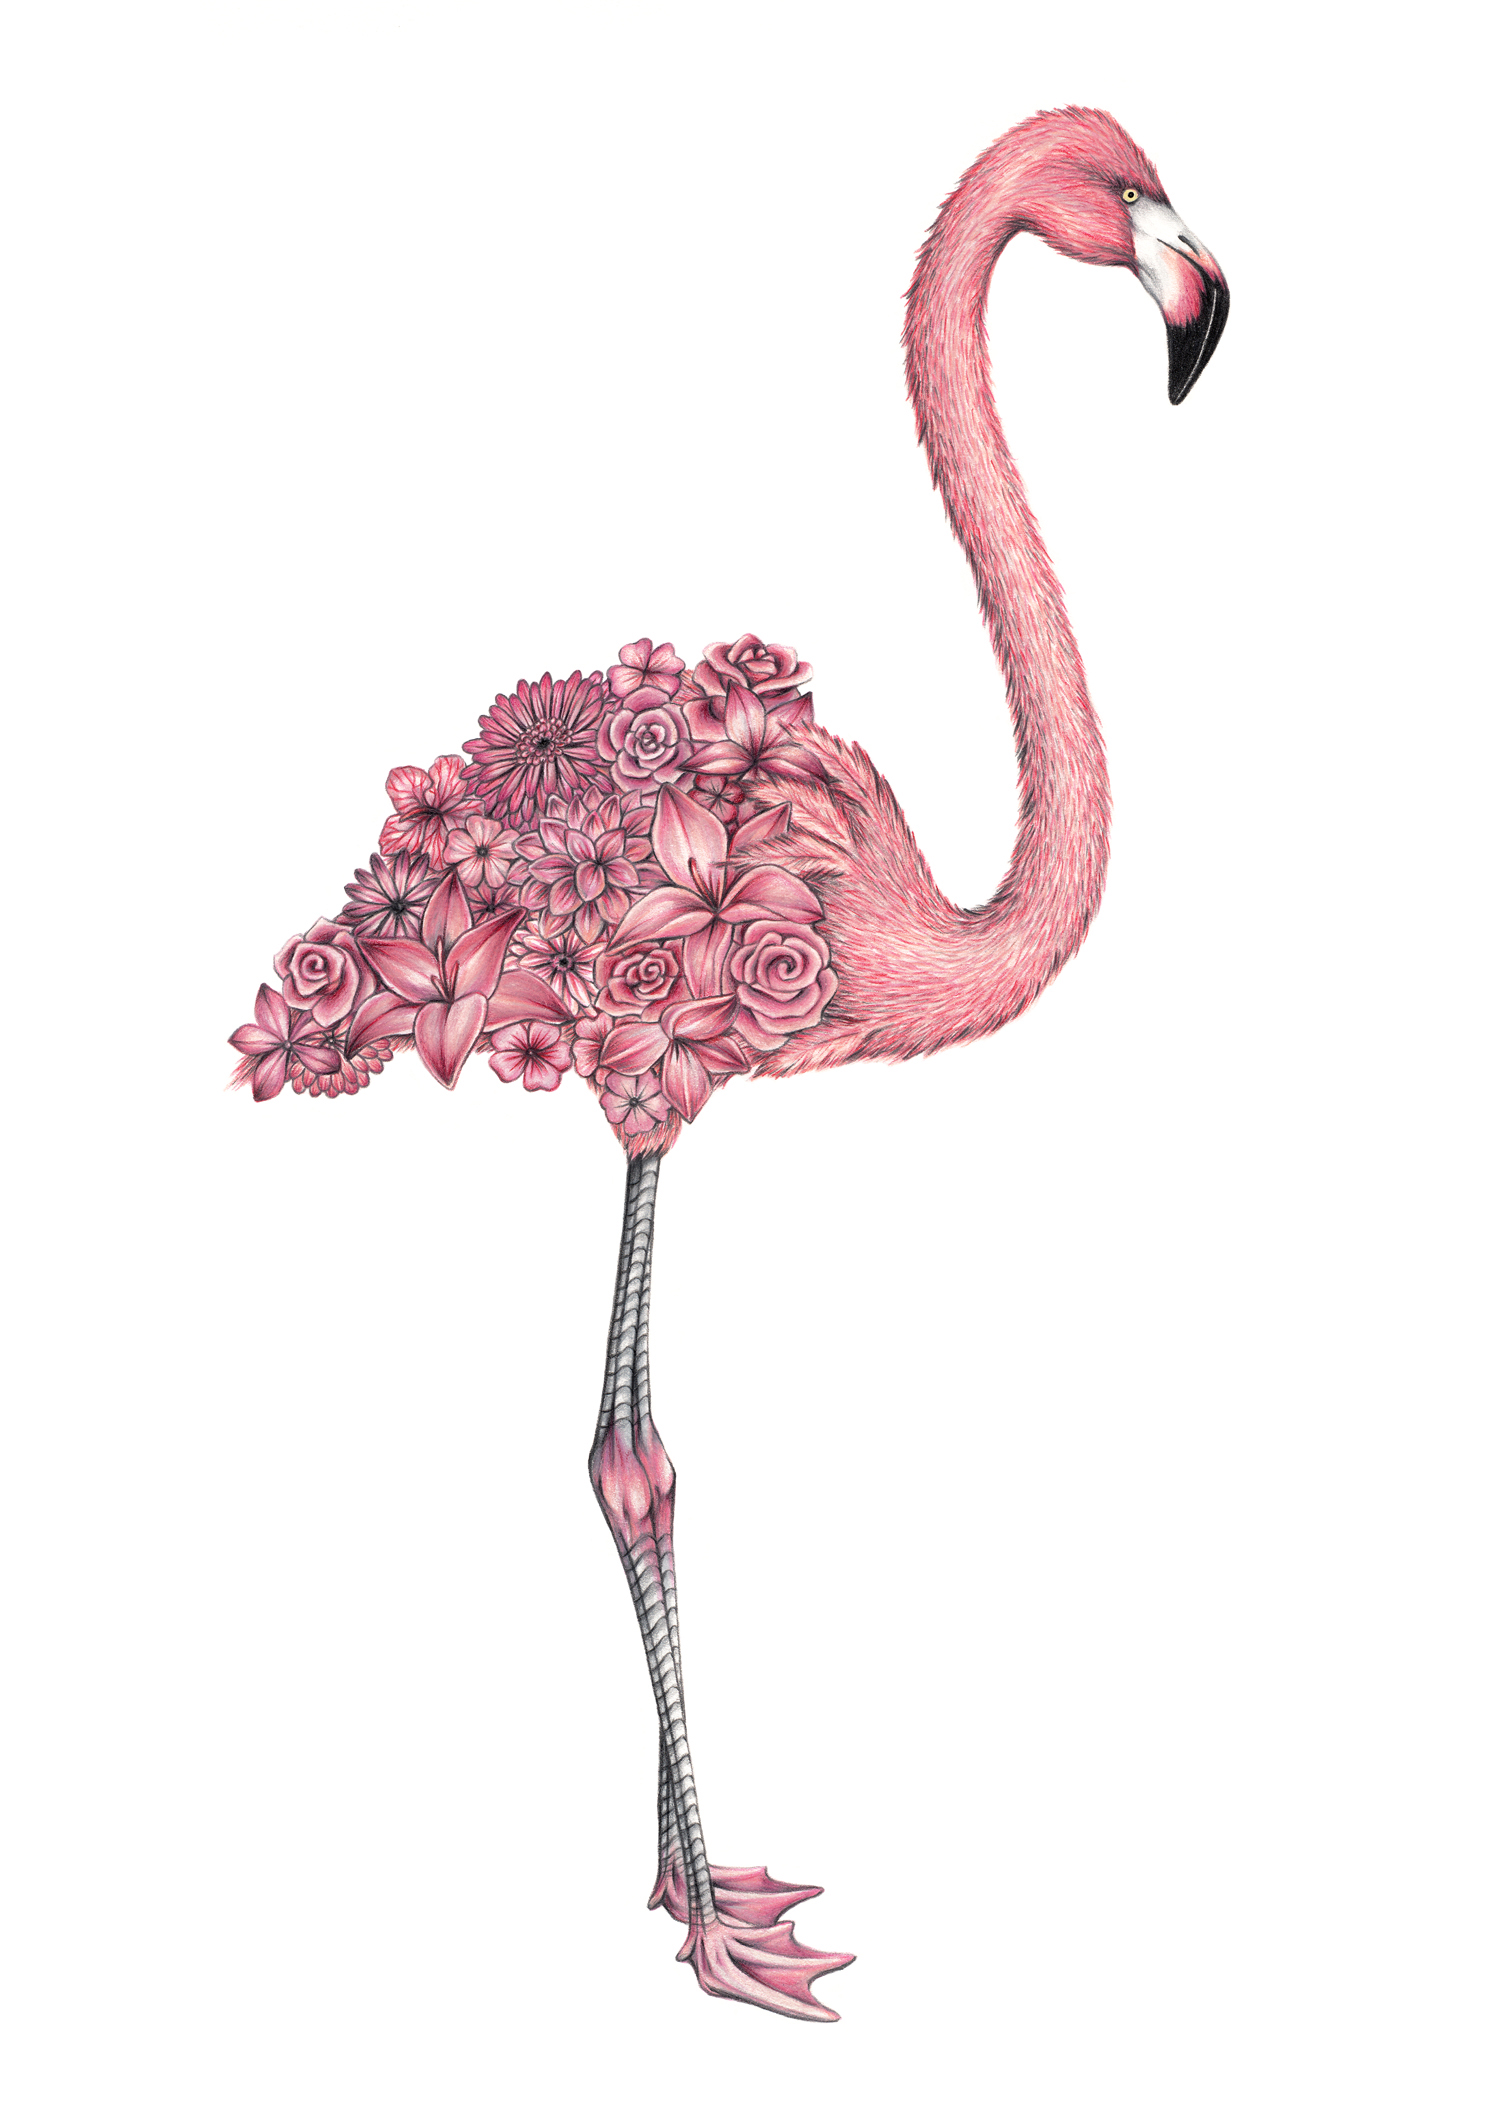 7_chloe_mickham_flamingo